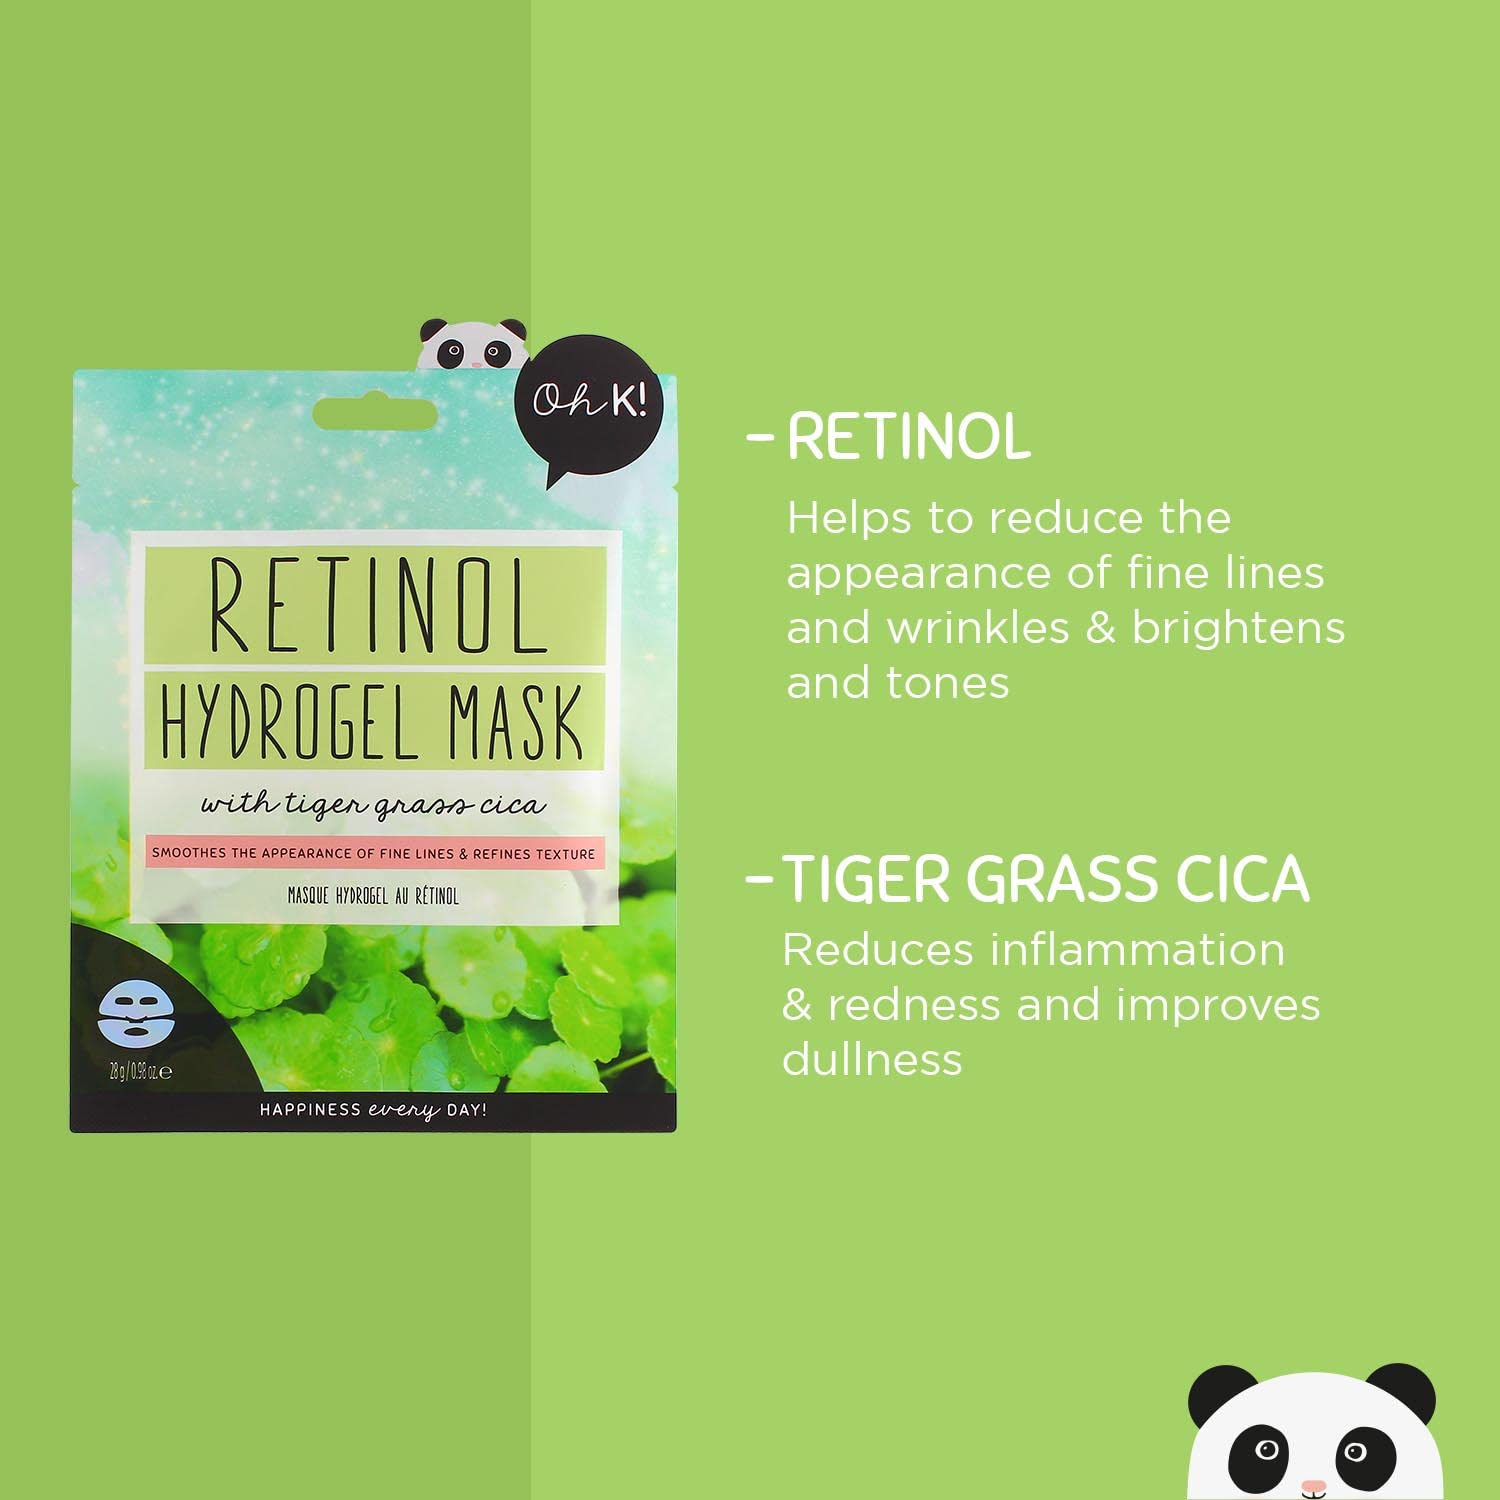 Oh K! Retinol Hydrogel Anti-aging Sheet Mask